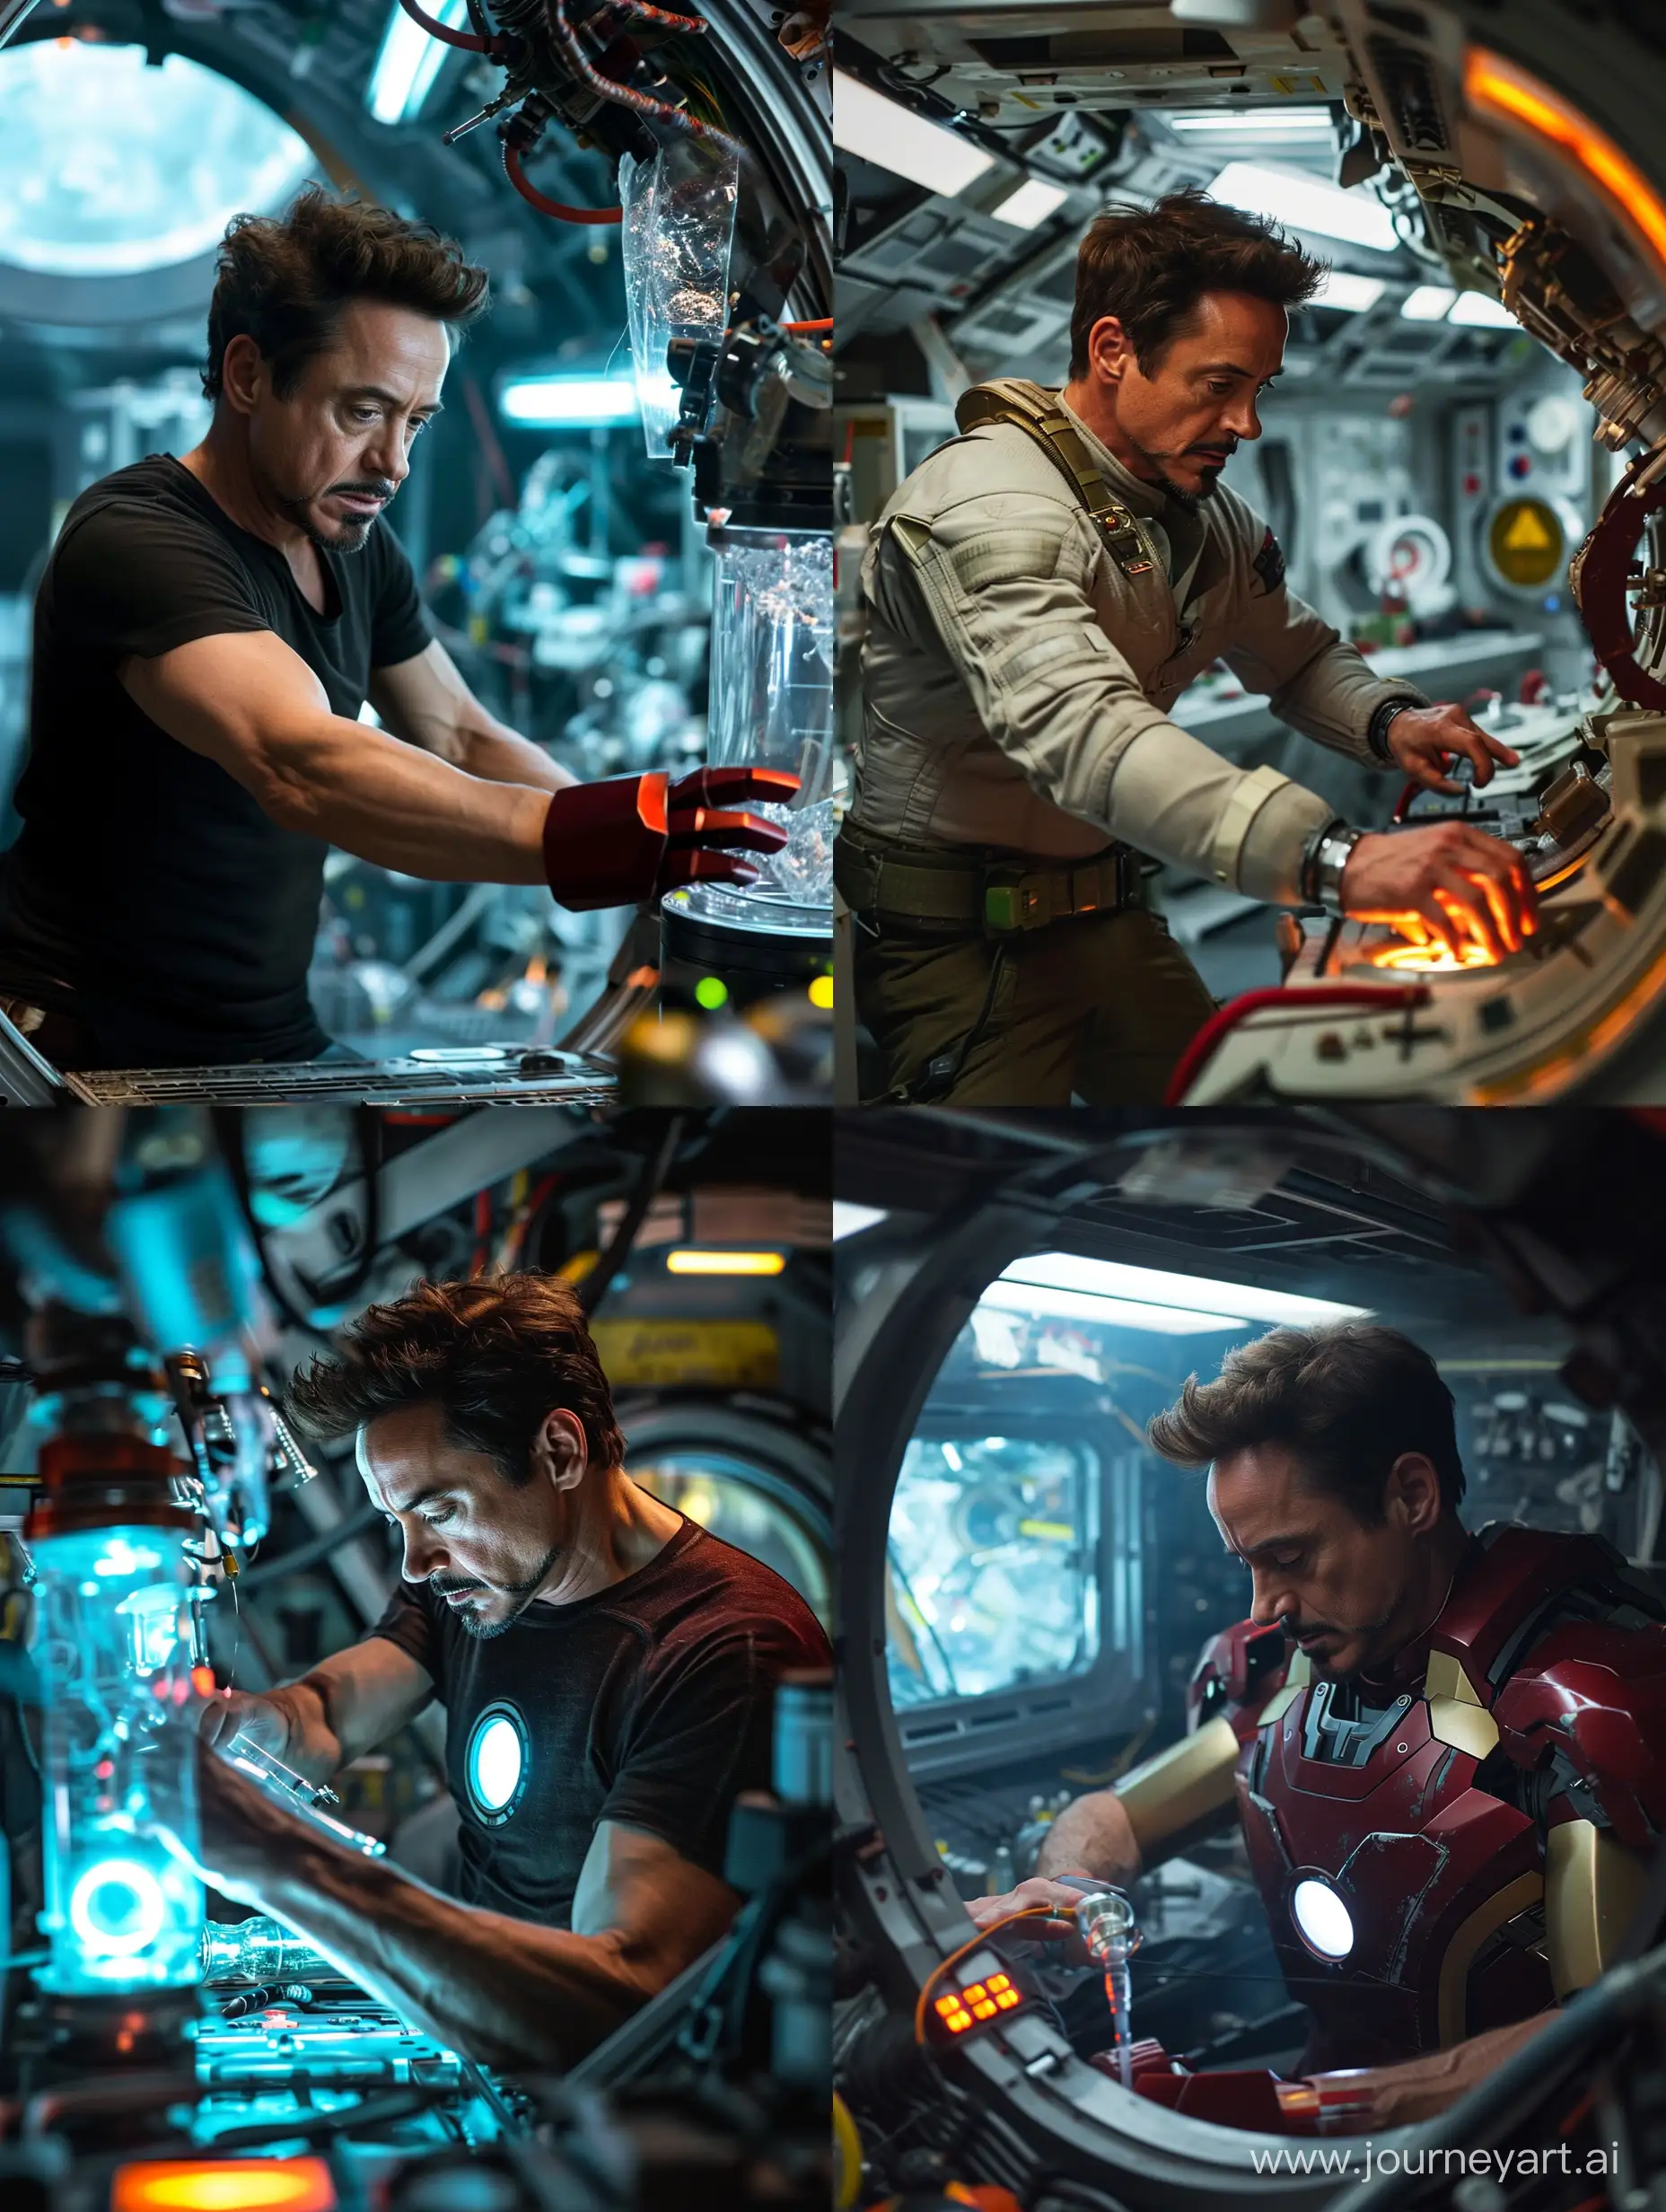 Tony stark doing experiments in space ship.midjourney